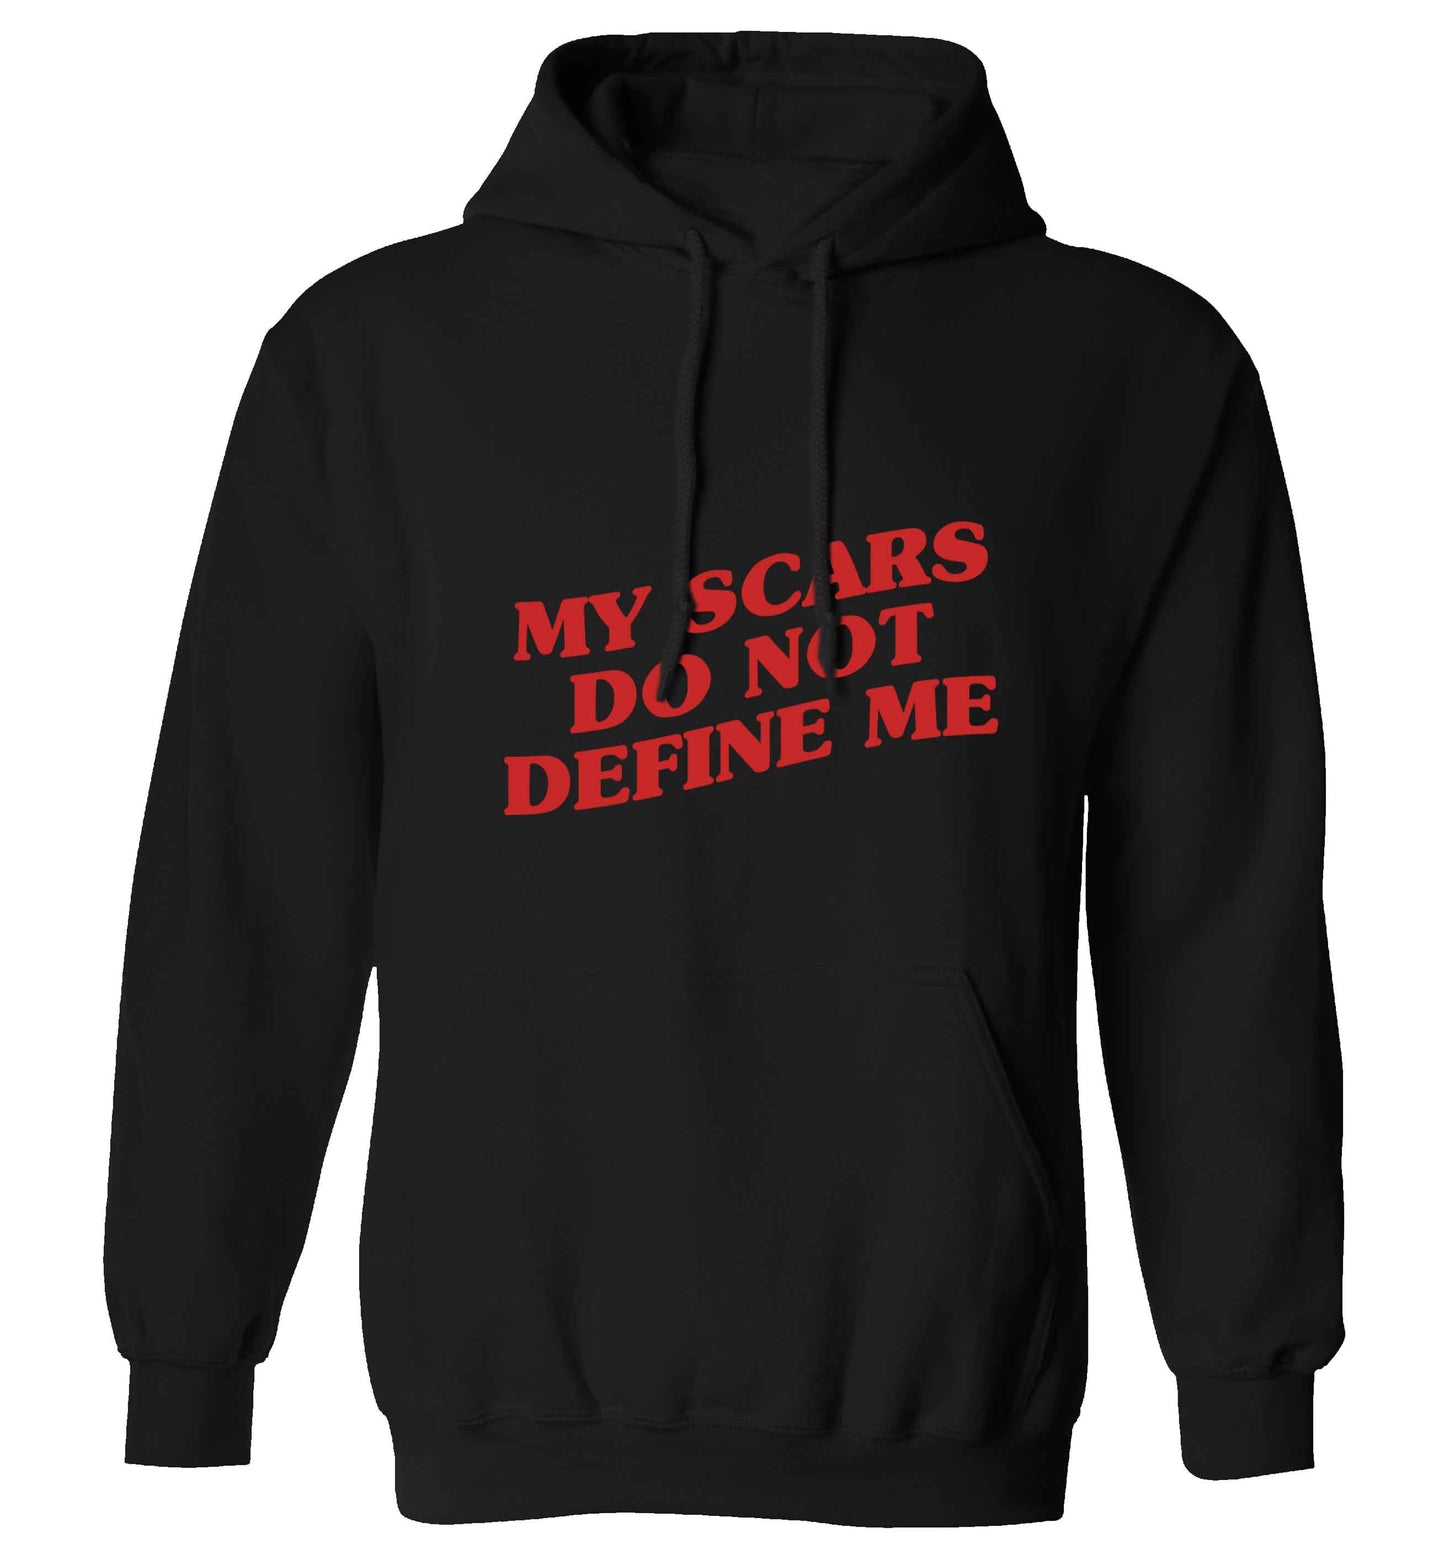 My scars do not define me adults unisex black hoodie 2XL